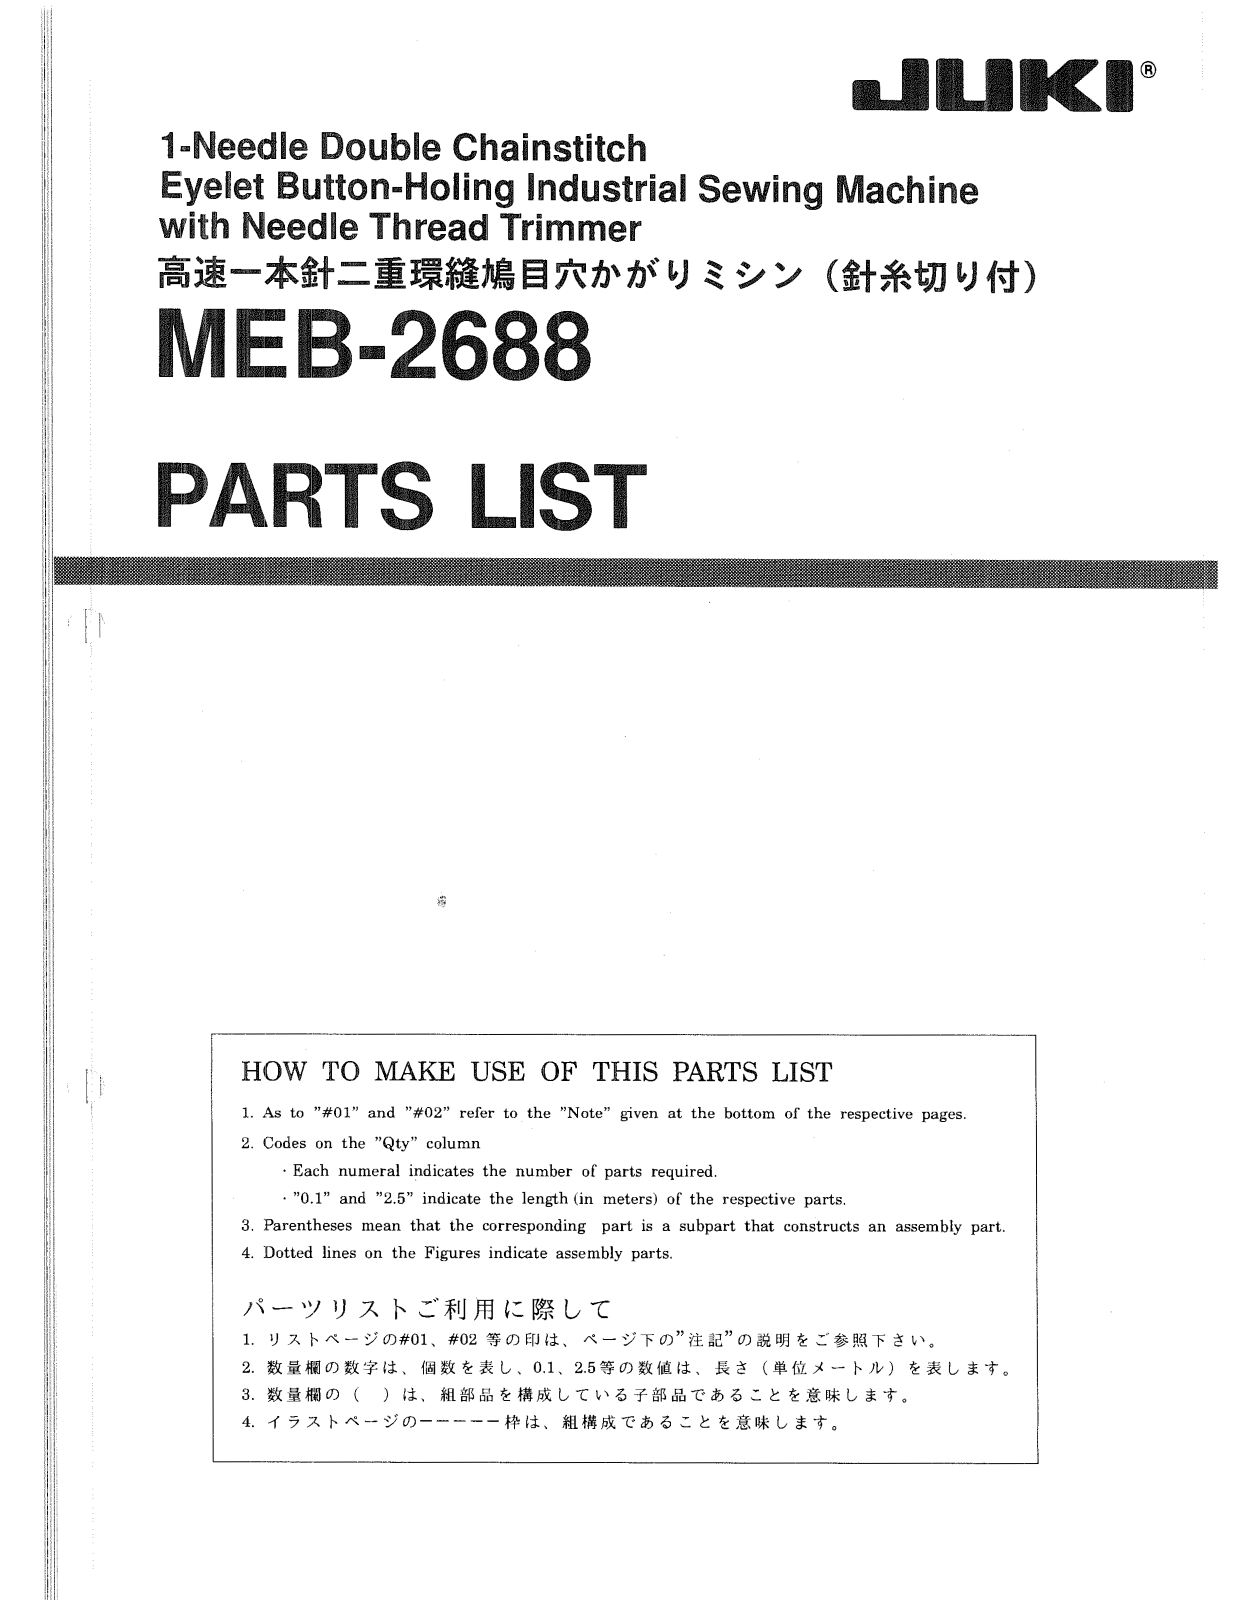 JUKI MEB-2688 Parts List